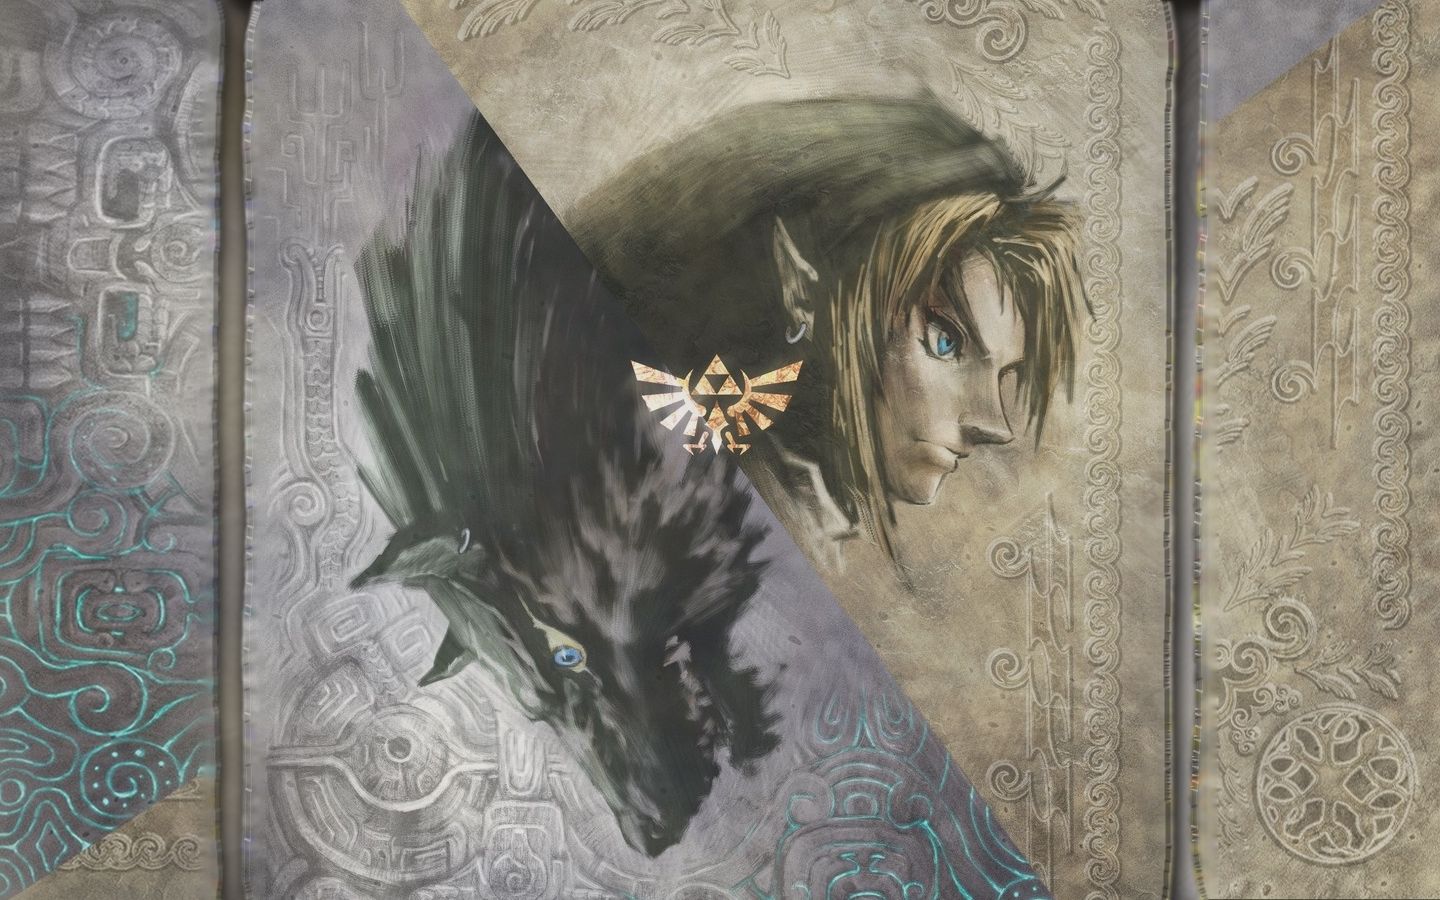 The Legend Of Zelda Twilight Princess Wallpaper